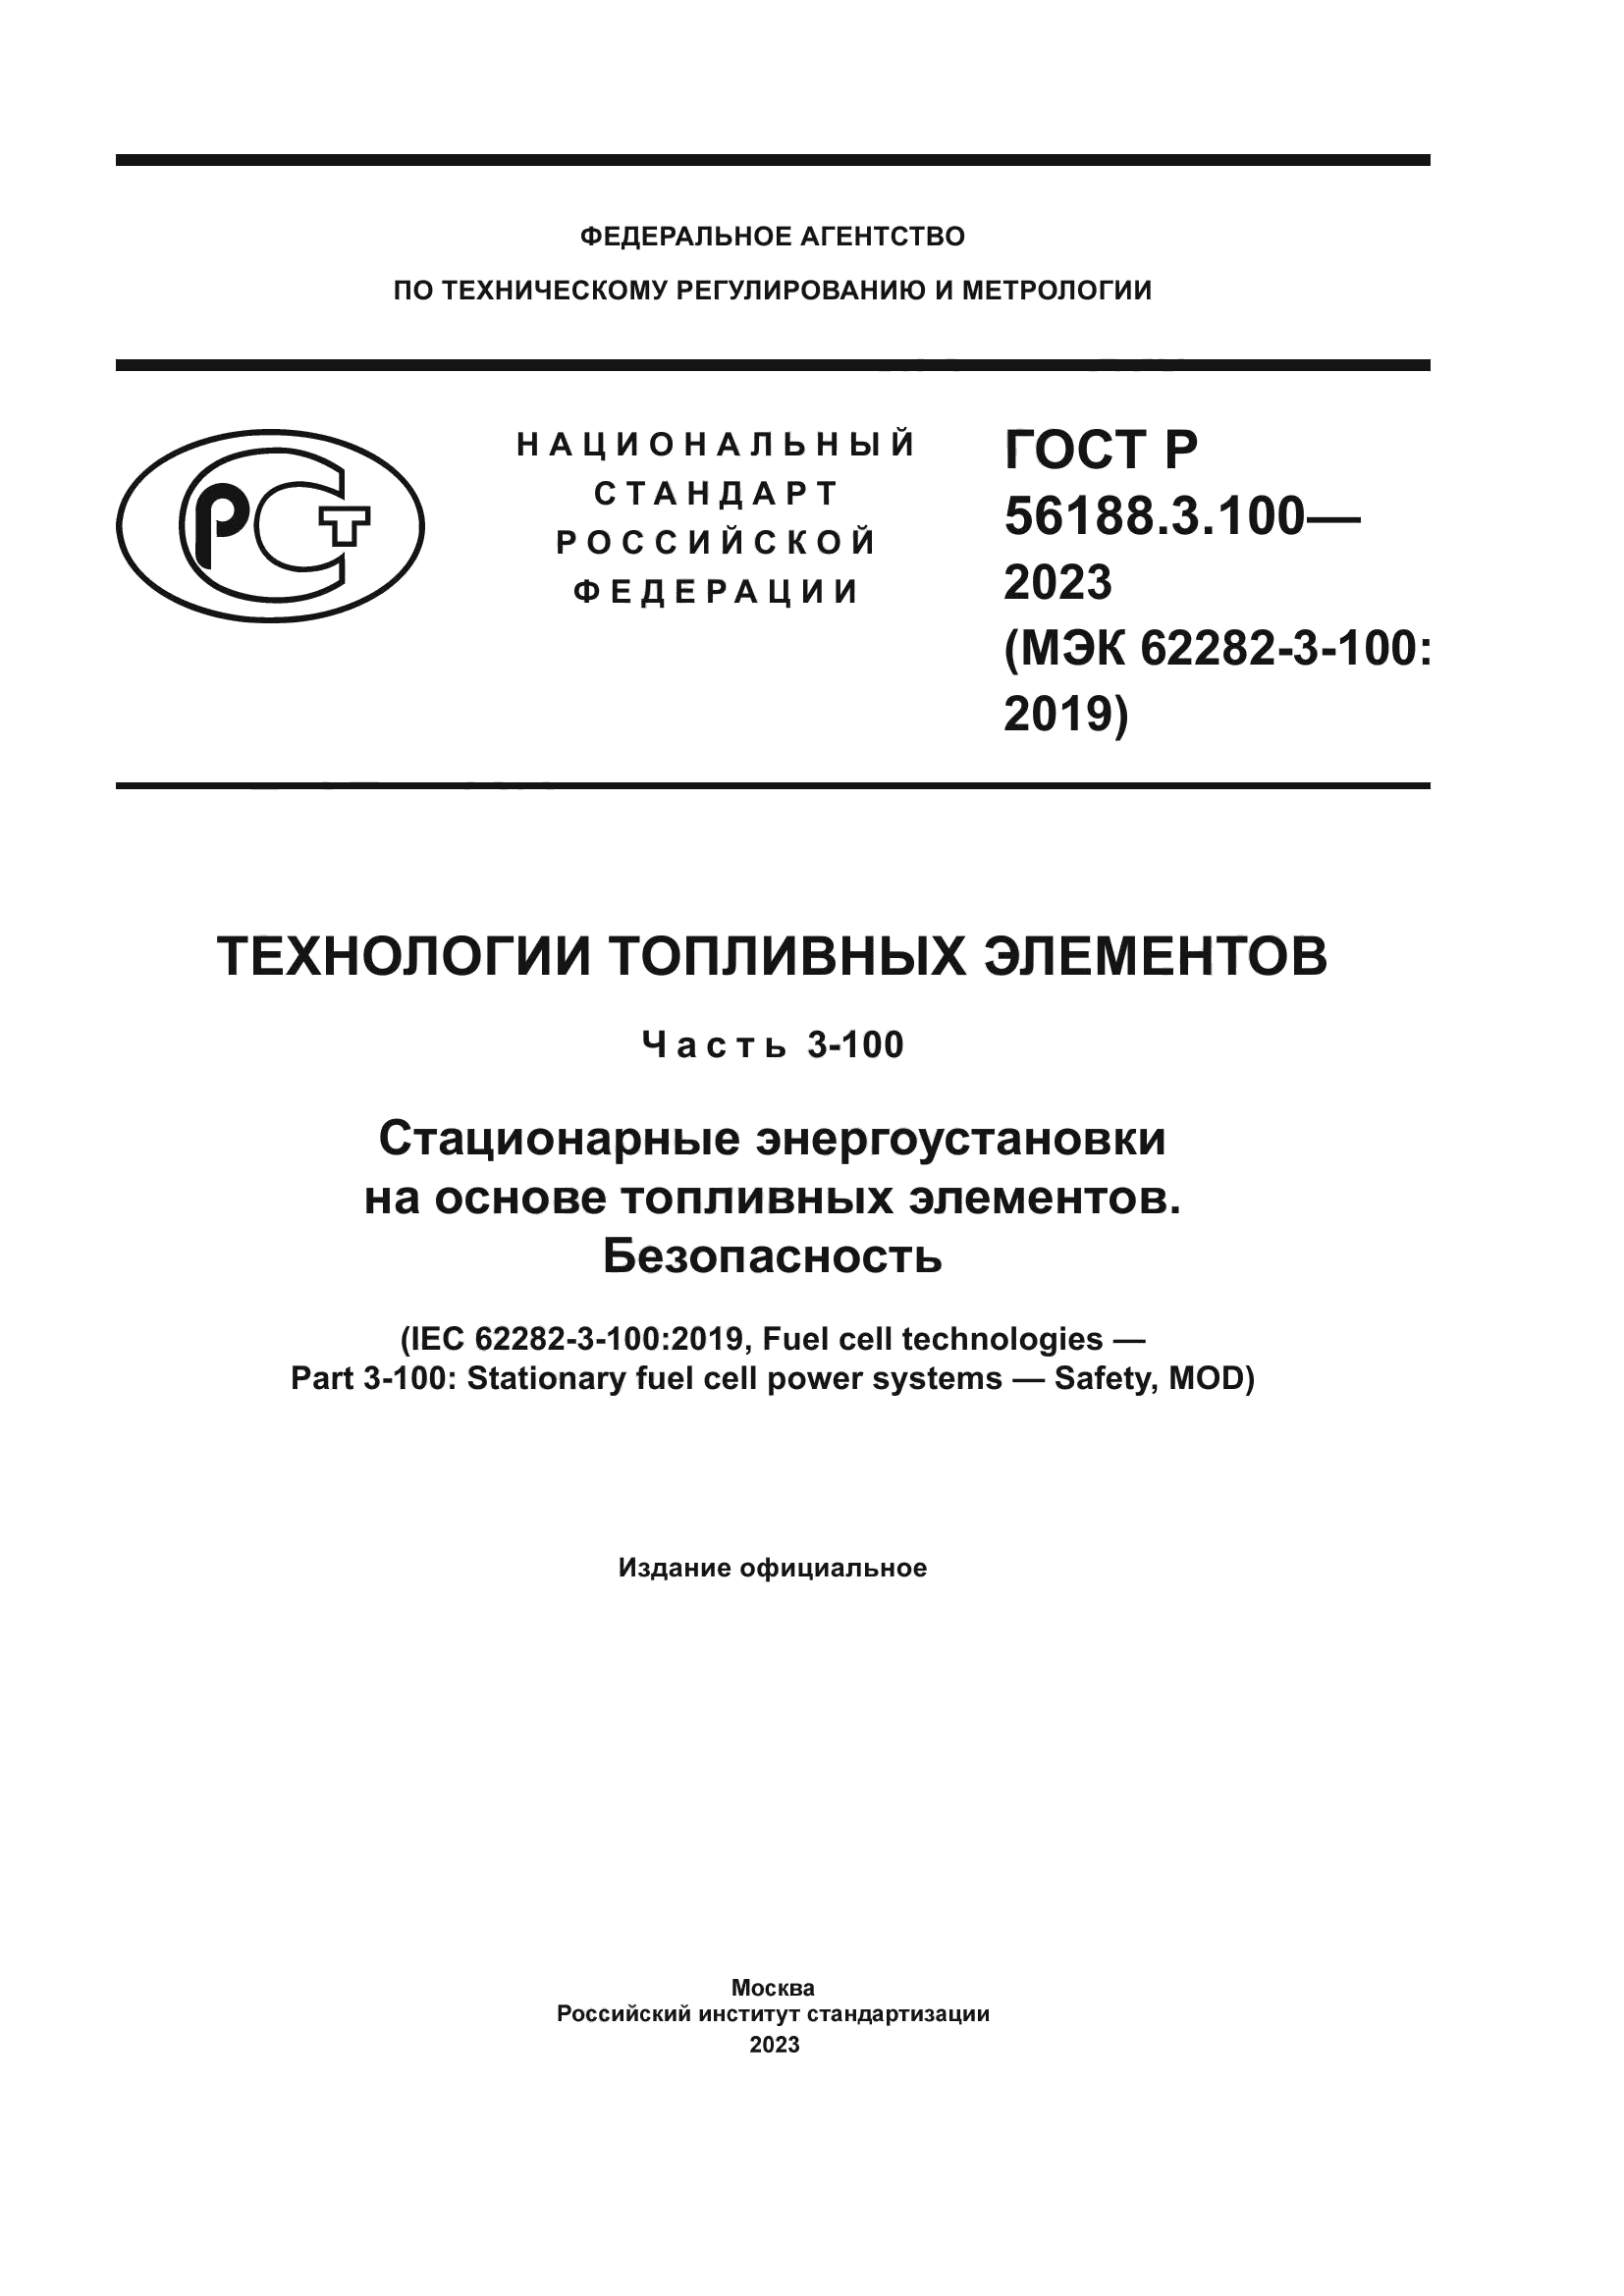 ГОСТ Р 56188.3.100-2023